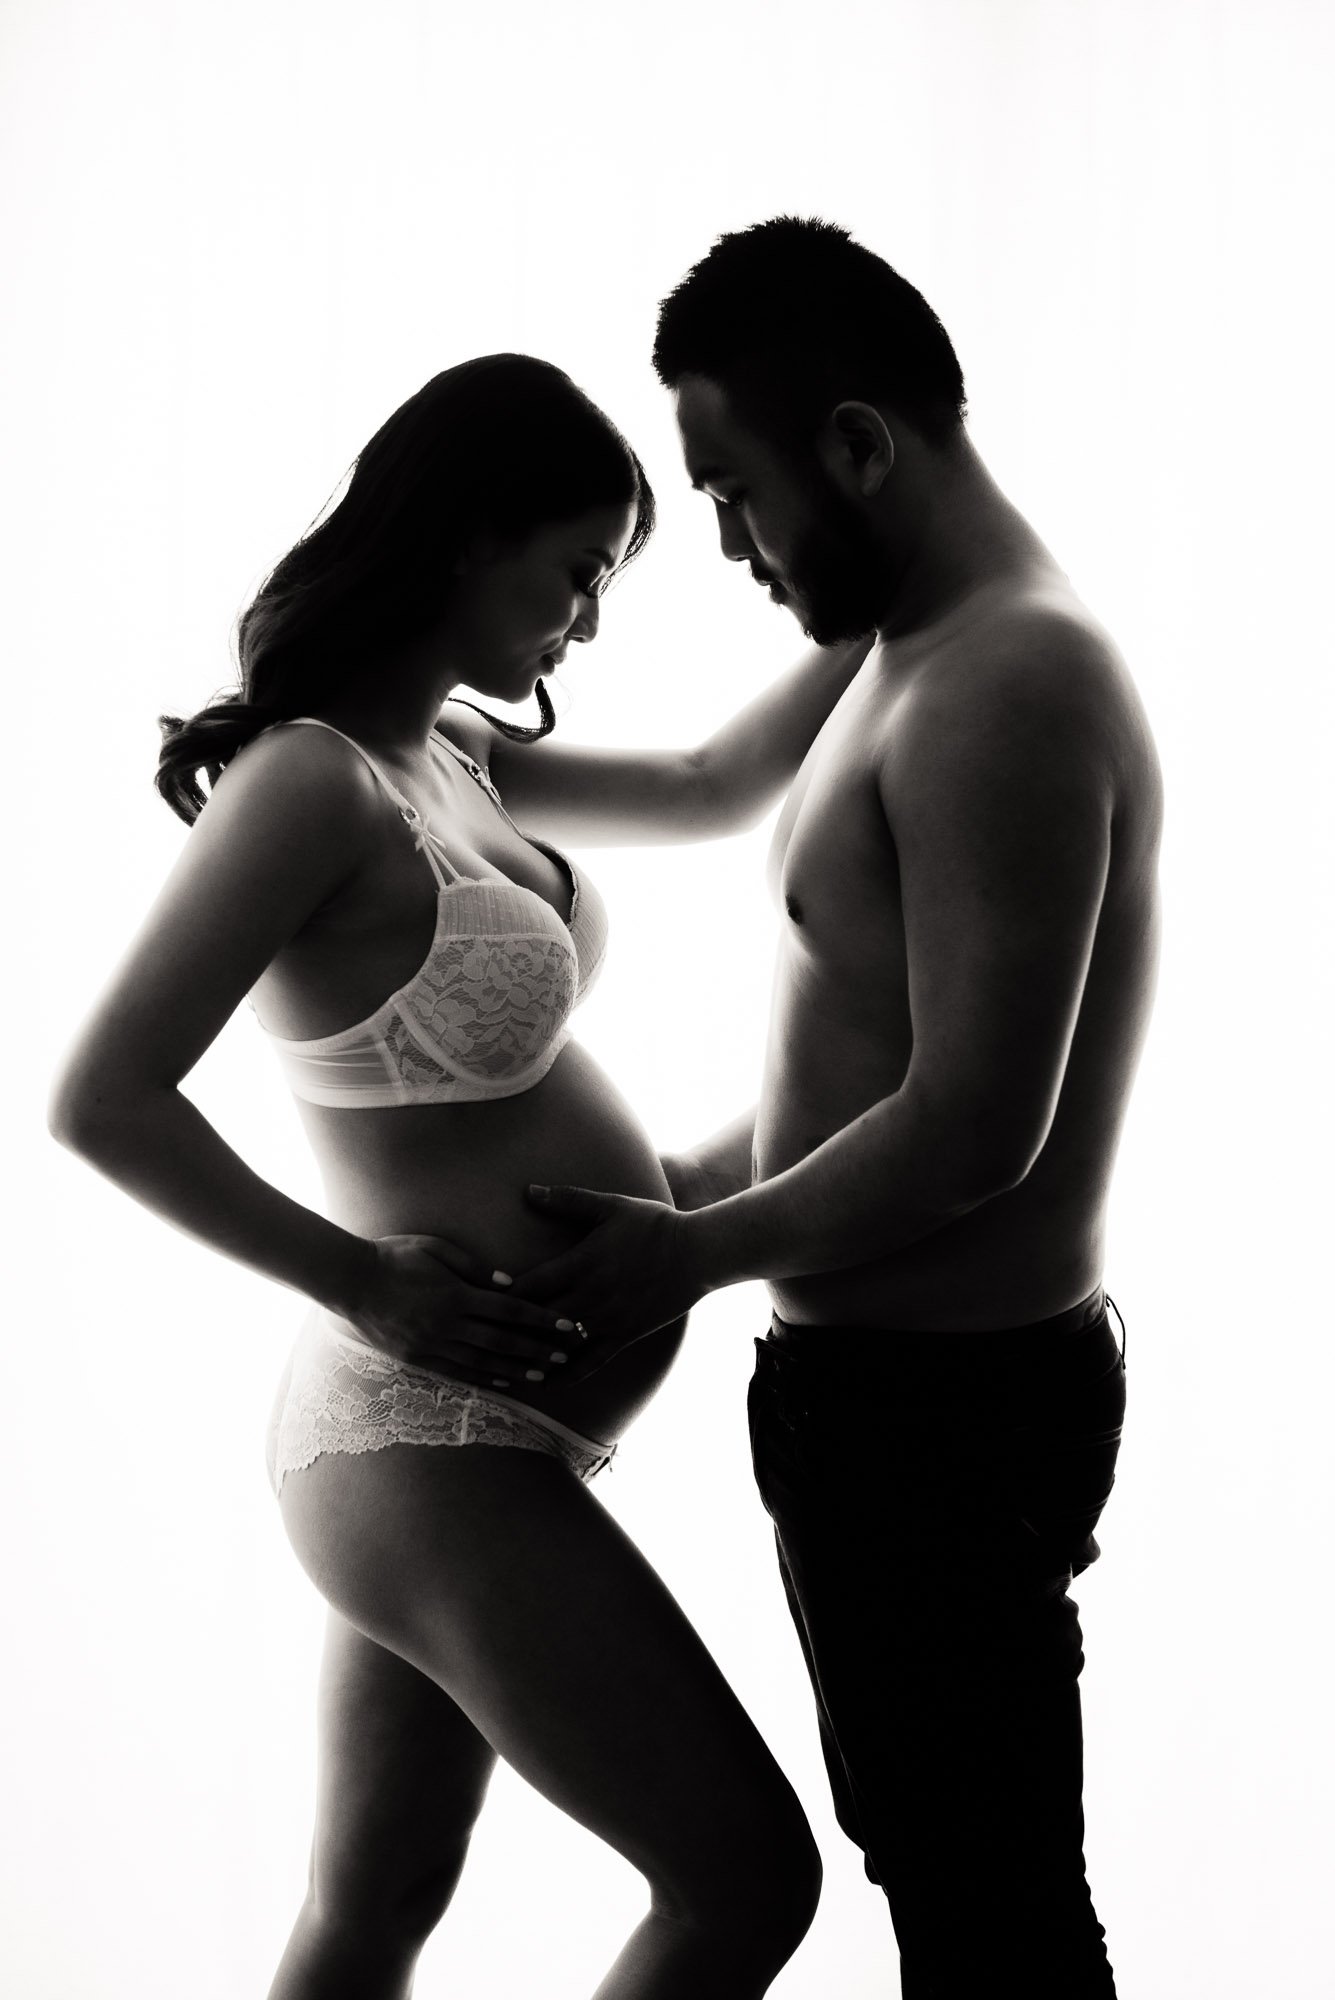 Couple's Maternity Photoshoot — Creek Street Photography